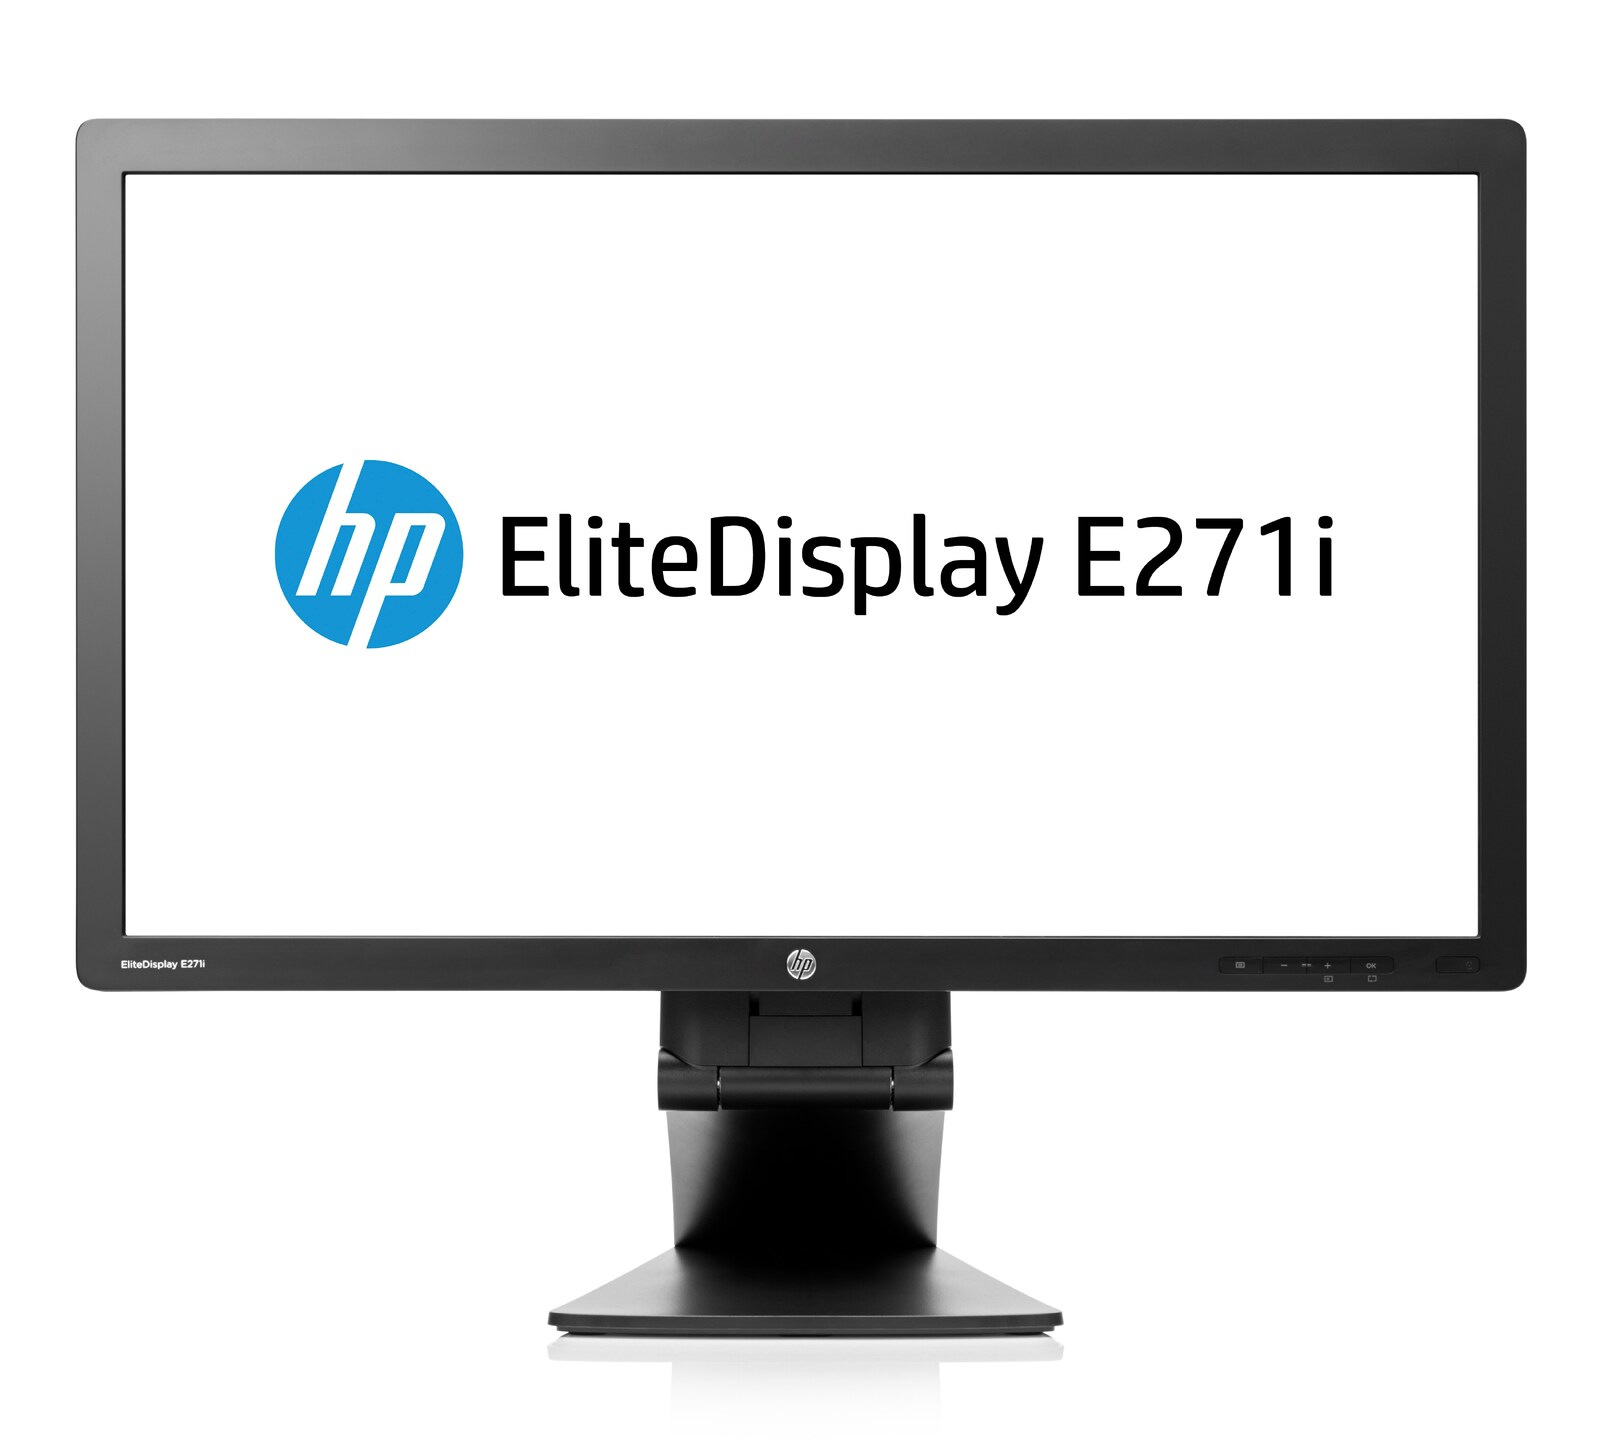 HP EliteDisplay E271i 27" IPS LED LCD Monitor 1920 x 1080 DVI DP VGA USB Hub Full Size Image